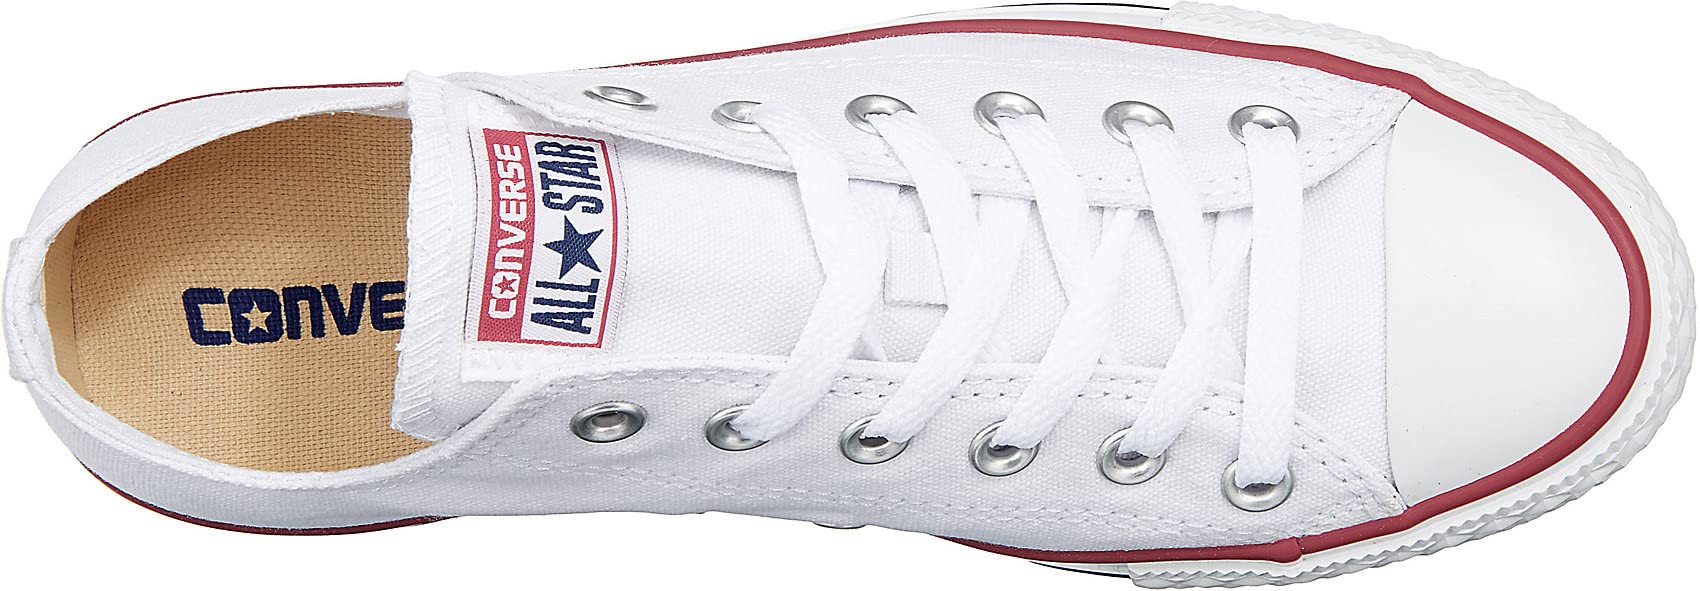 Converse Men's Chuck Taylor Sneakers